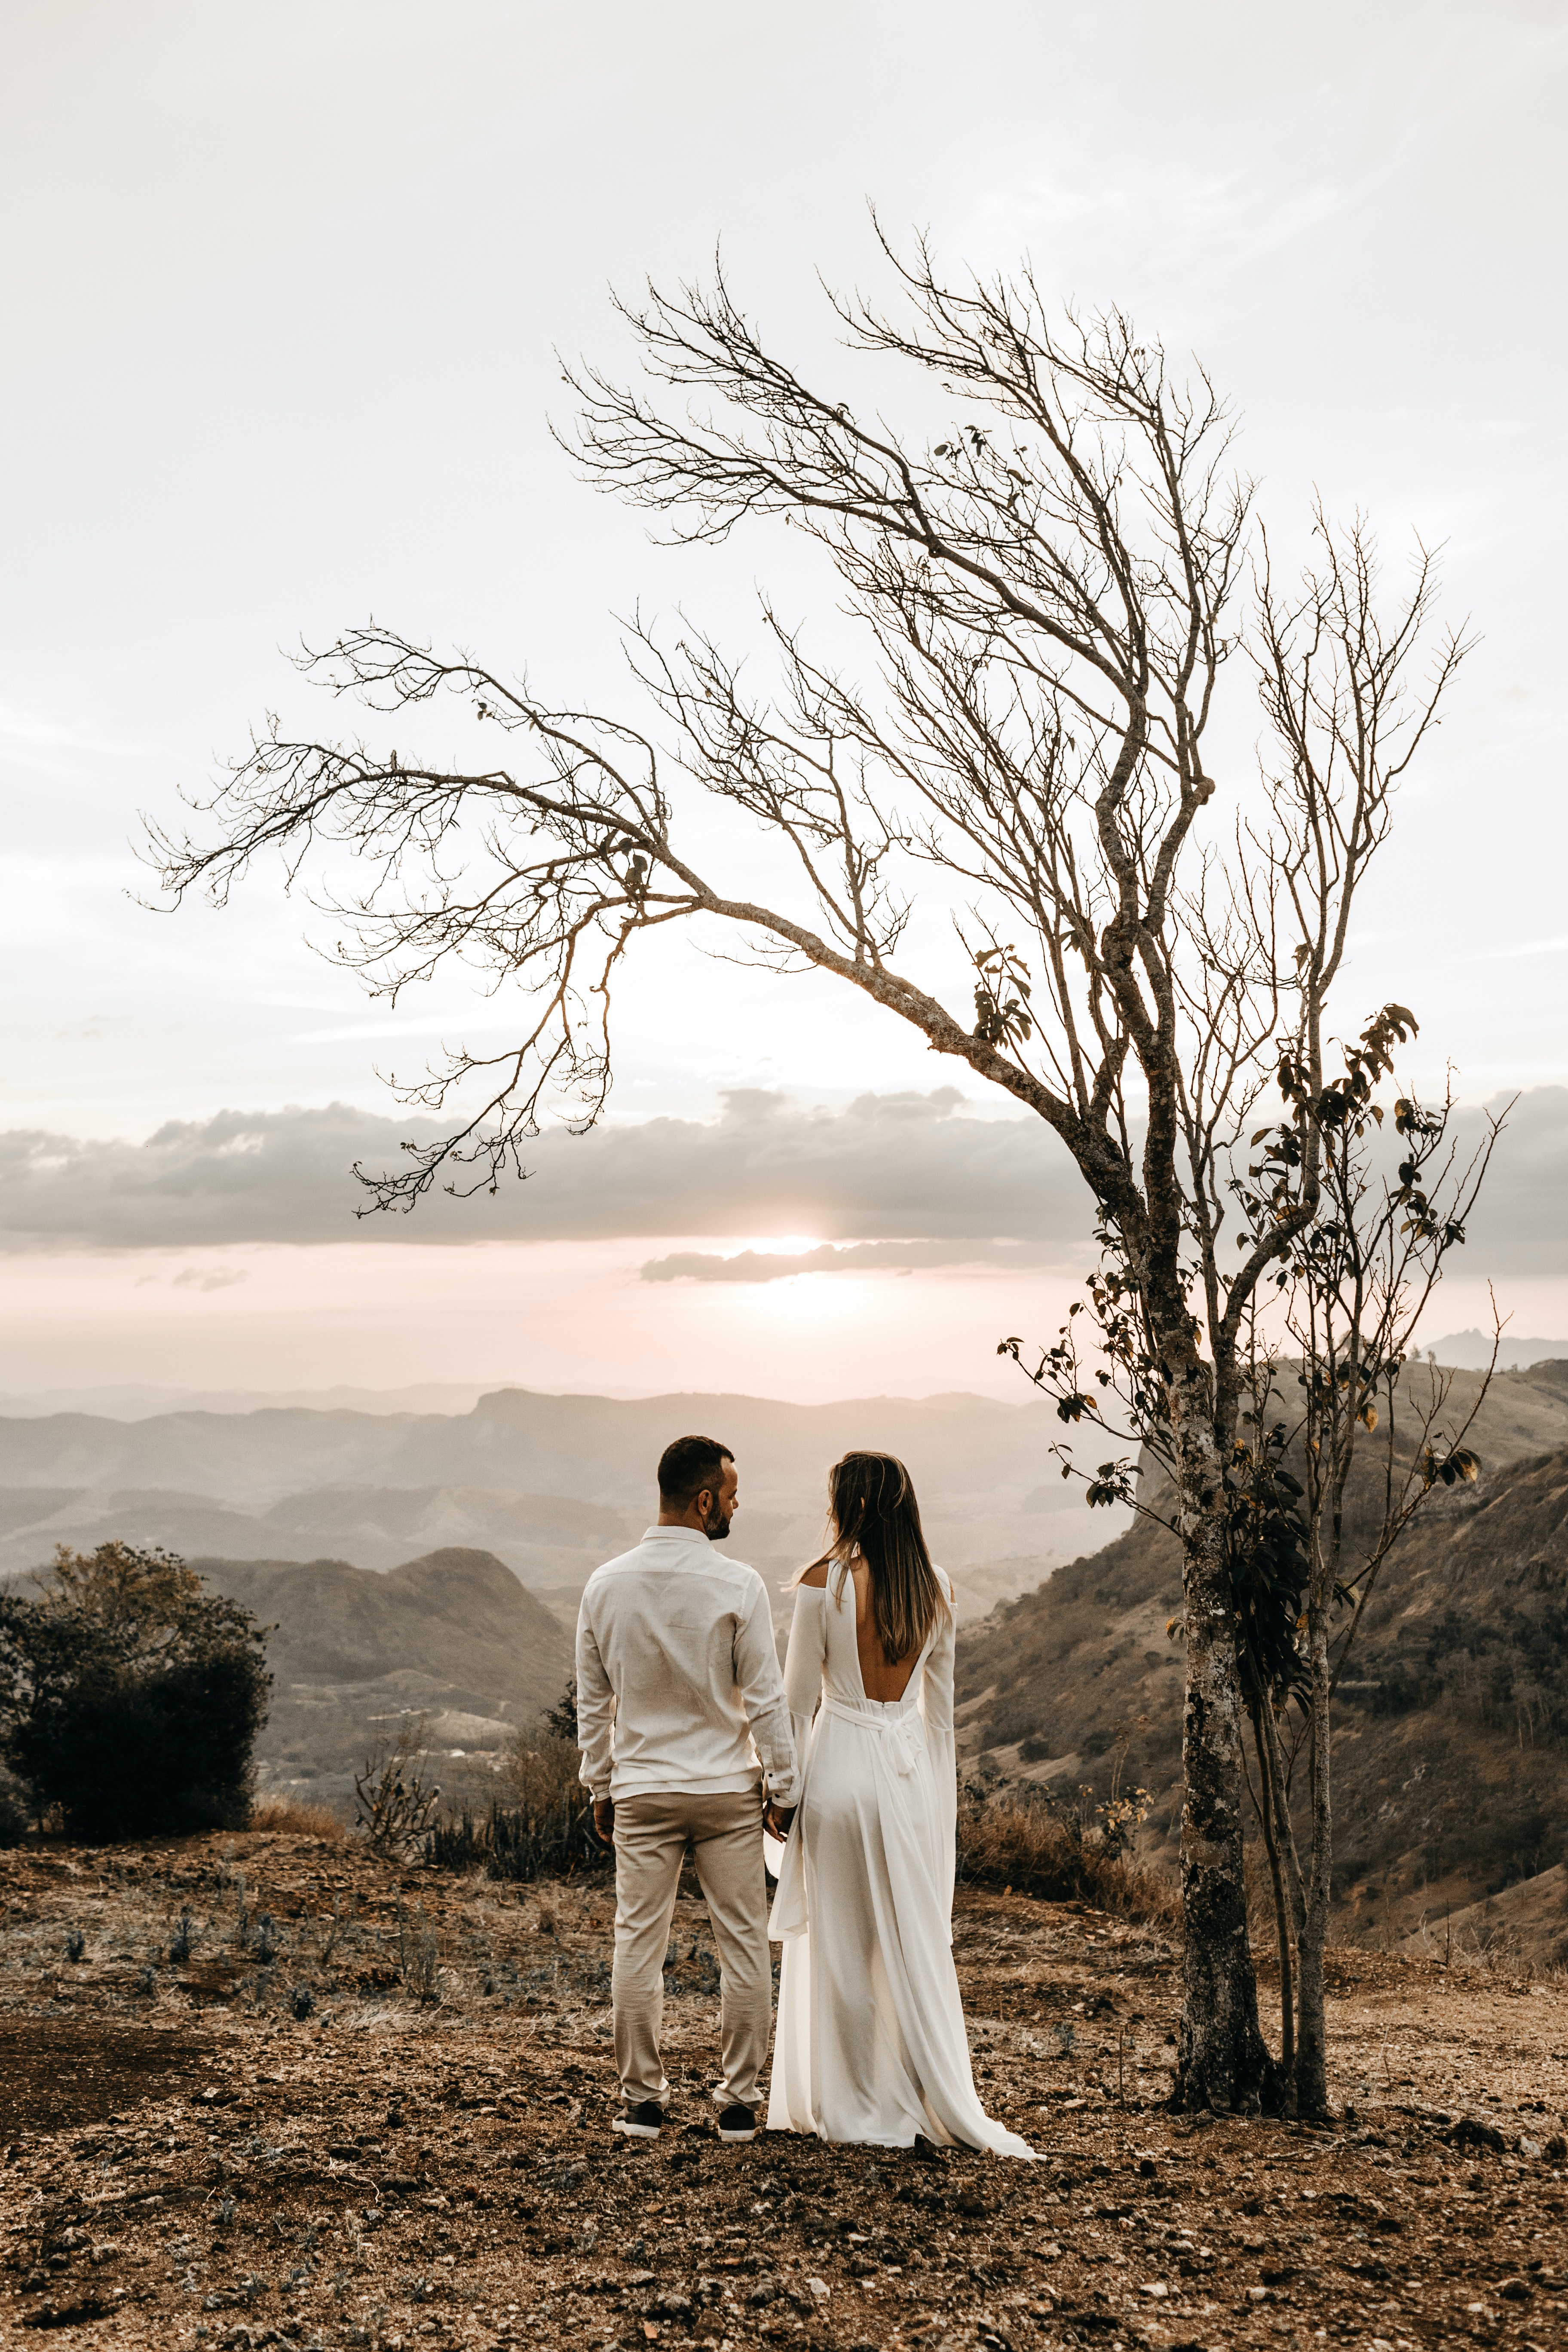 A bride and groom. | Source: Pexels